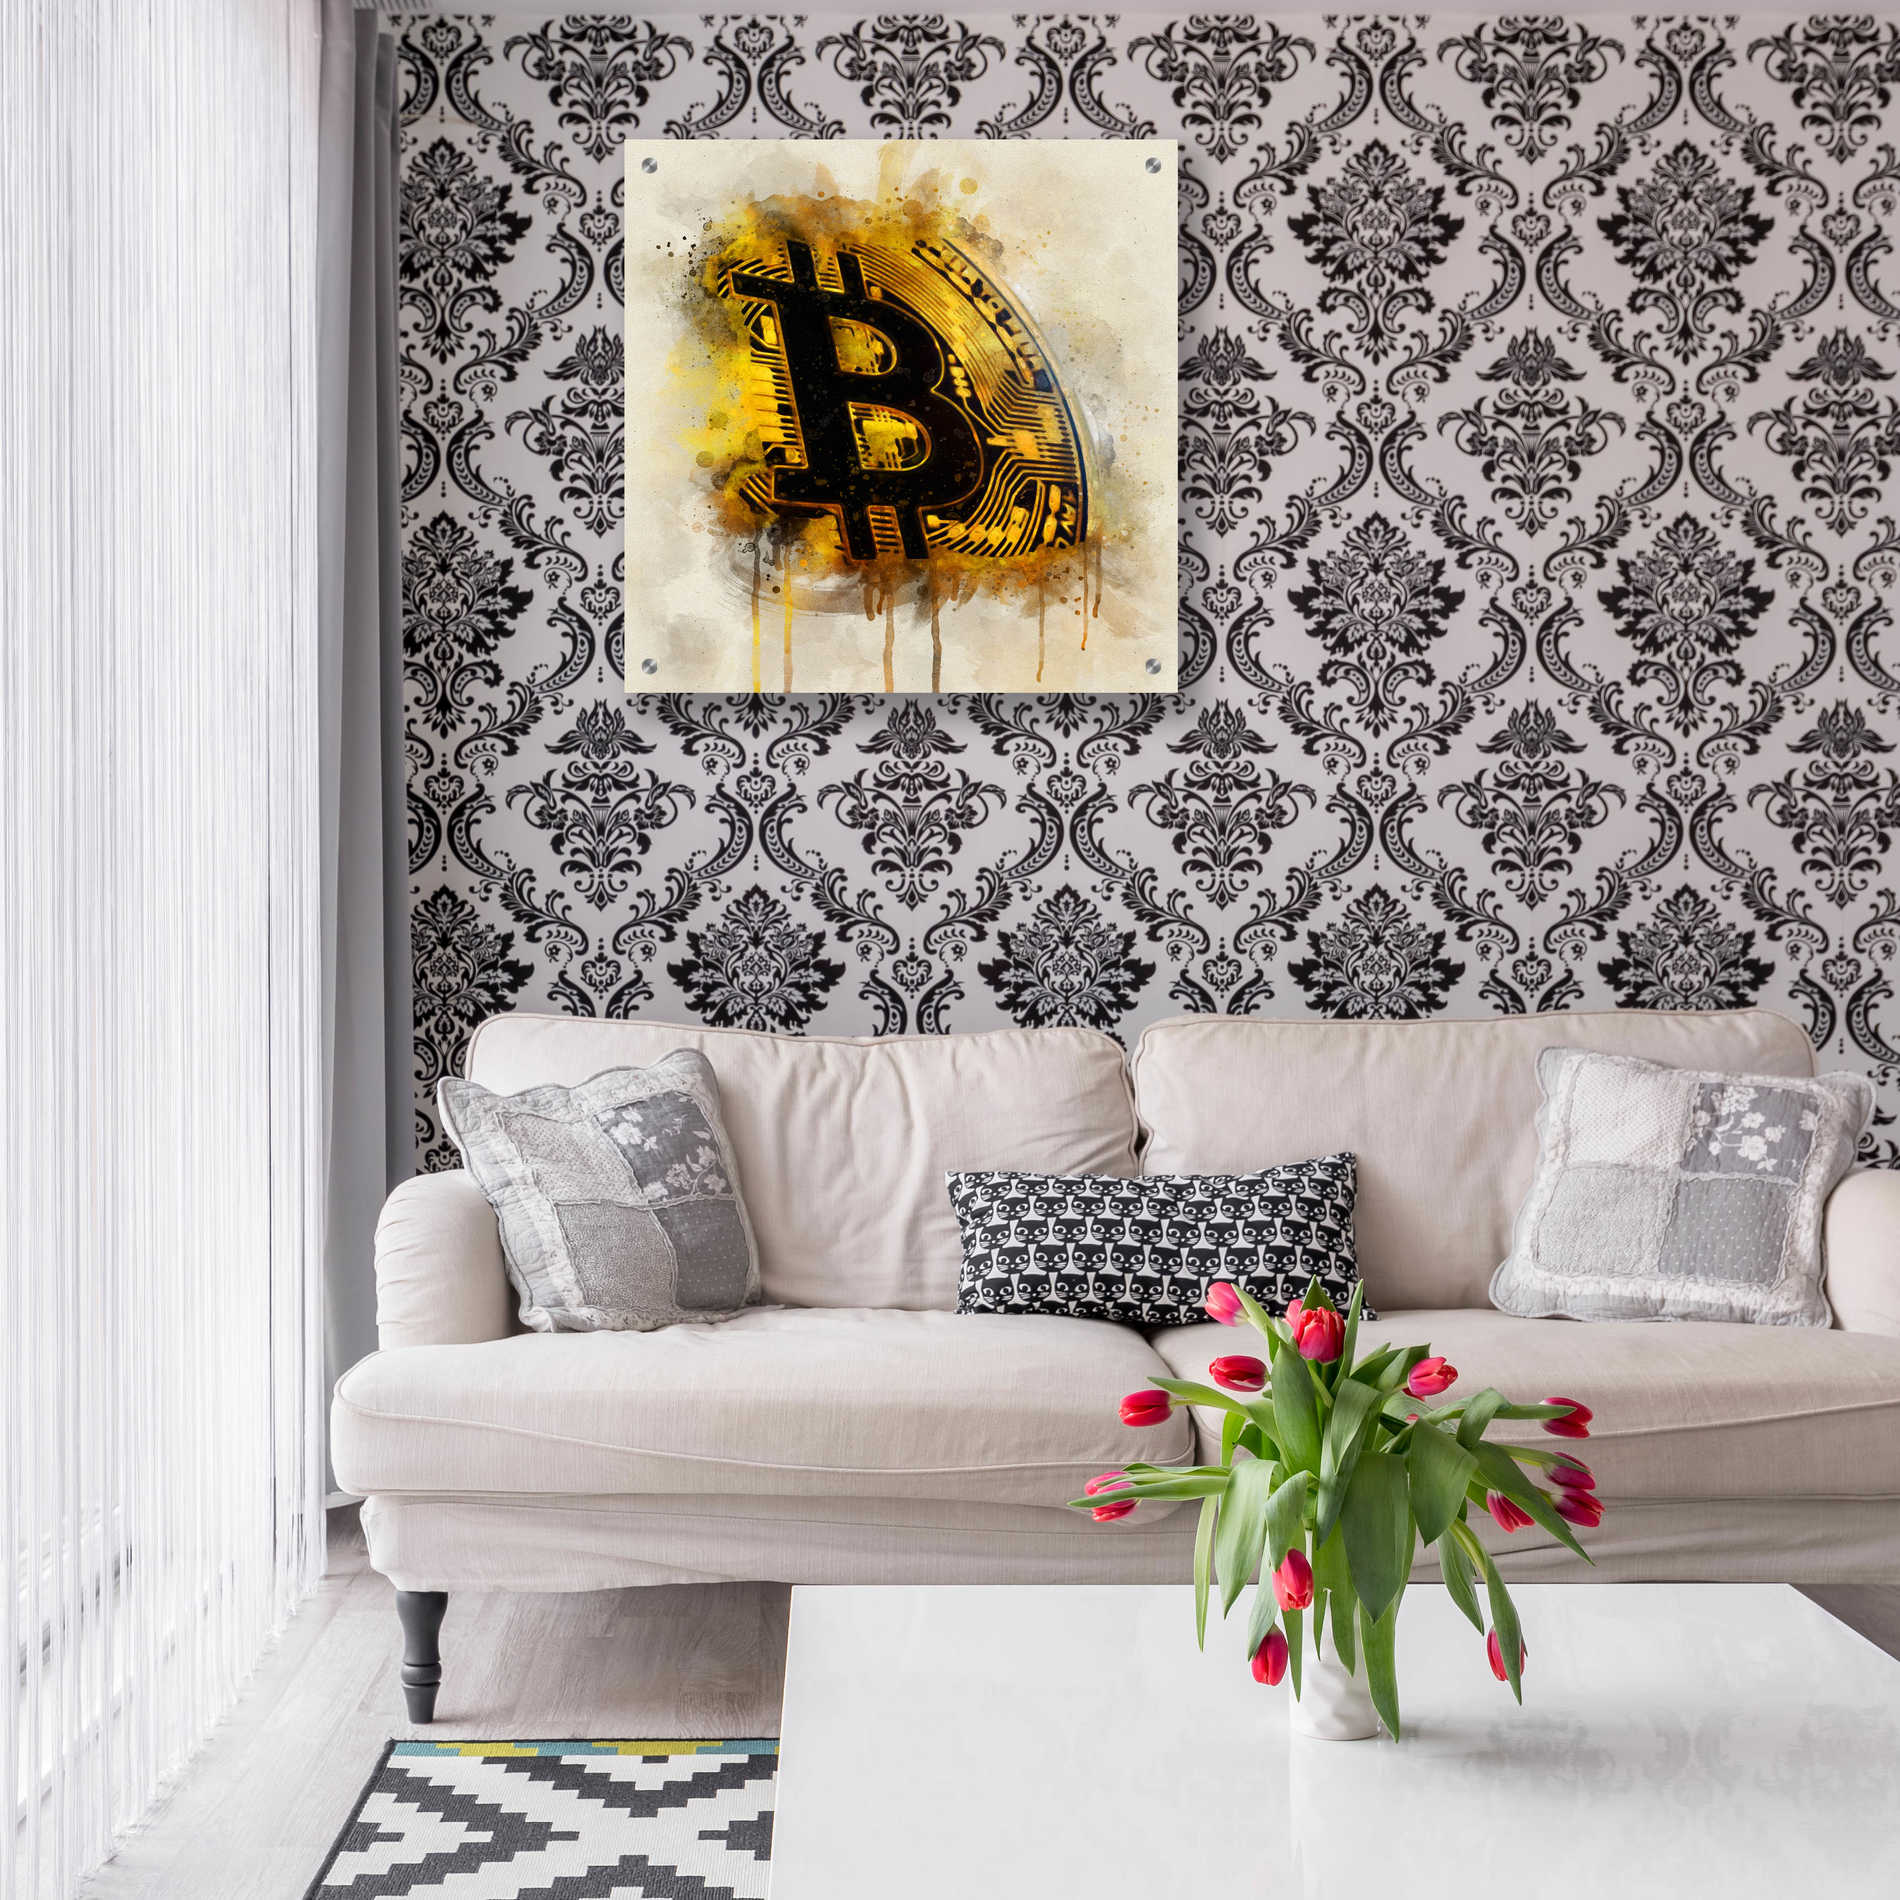 Epic Art 'Bitcoin Era in Gold' by Surma and Guillen, Acrylic Glass Wall Art,24x24